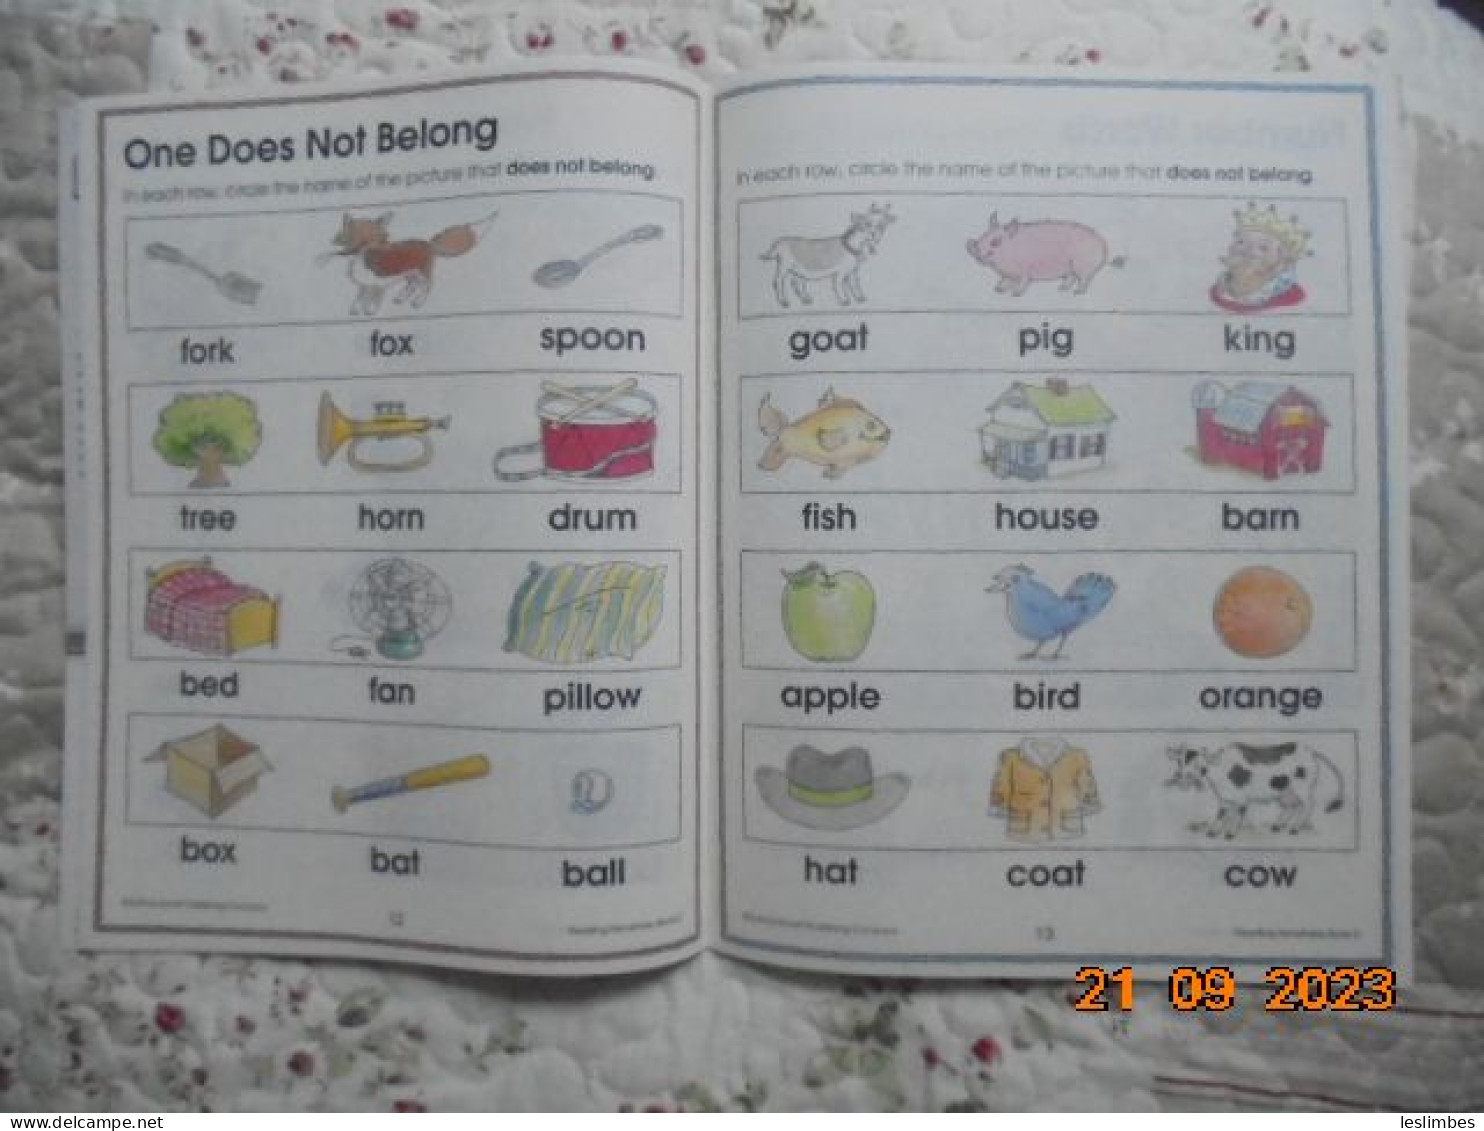 2015 School Zone "I Know It!" Reading Readiness Grades K-1 (ages 5-7) Book 2 - English Language/ Grammar